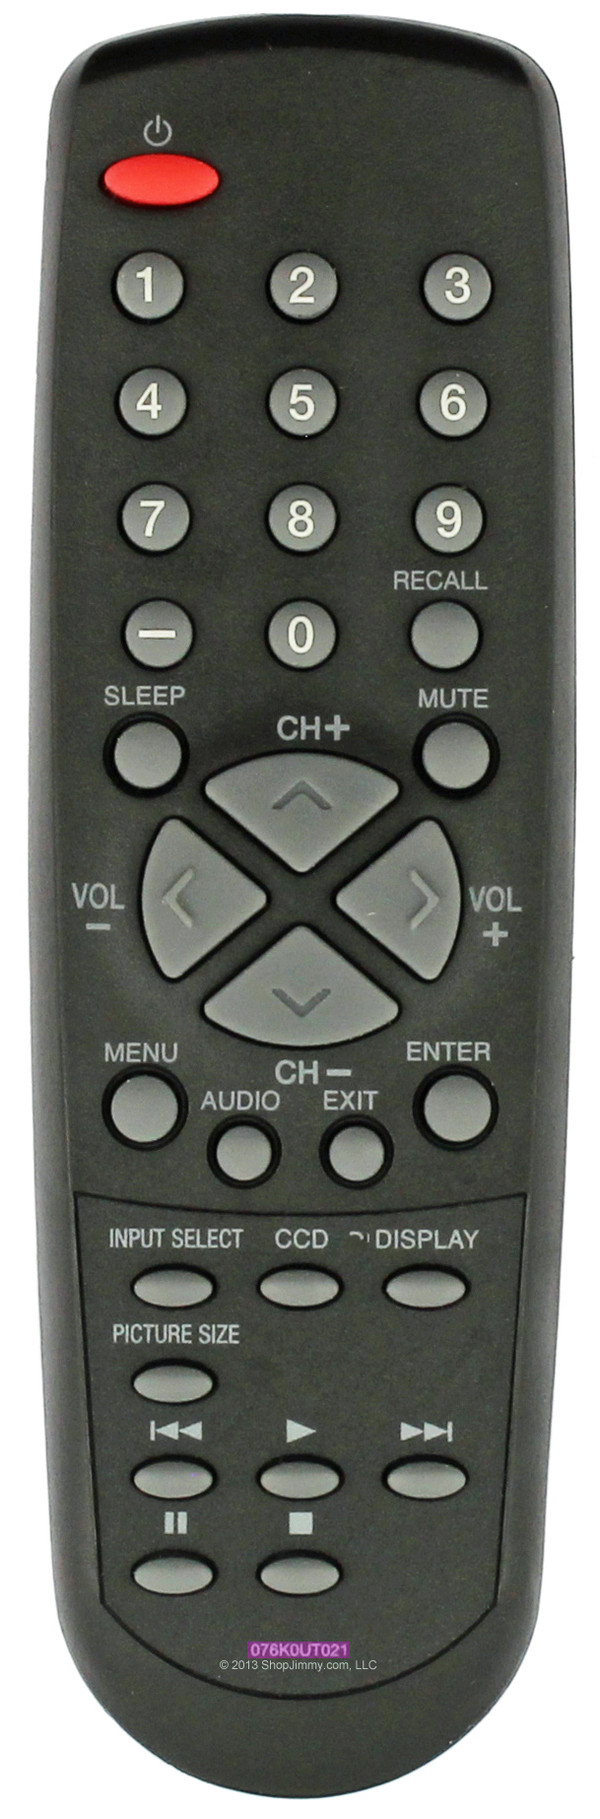 Sansui 076K0UT021 Remote Control